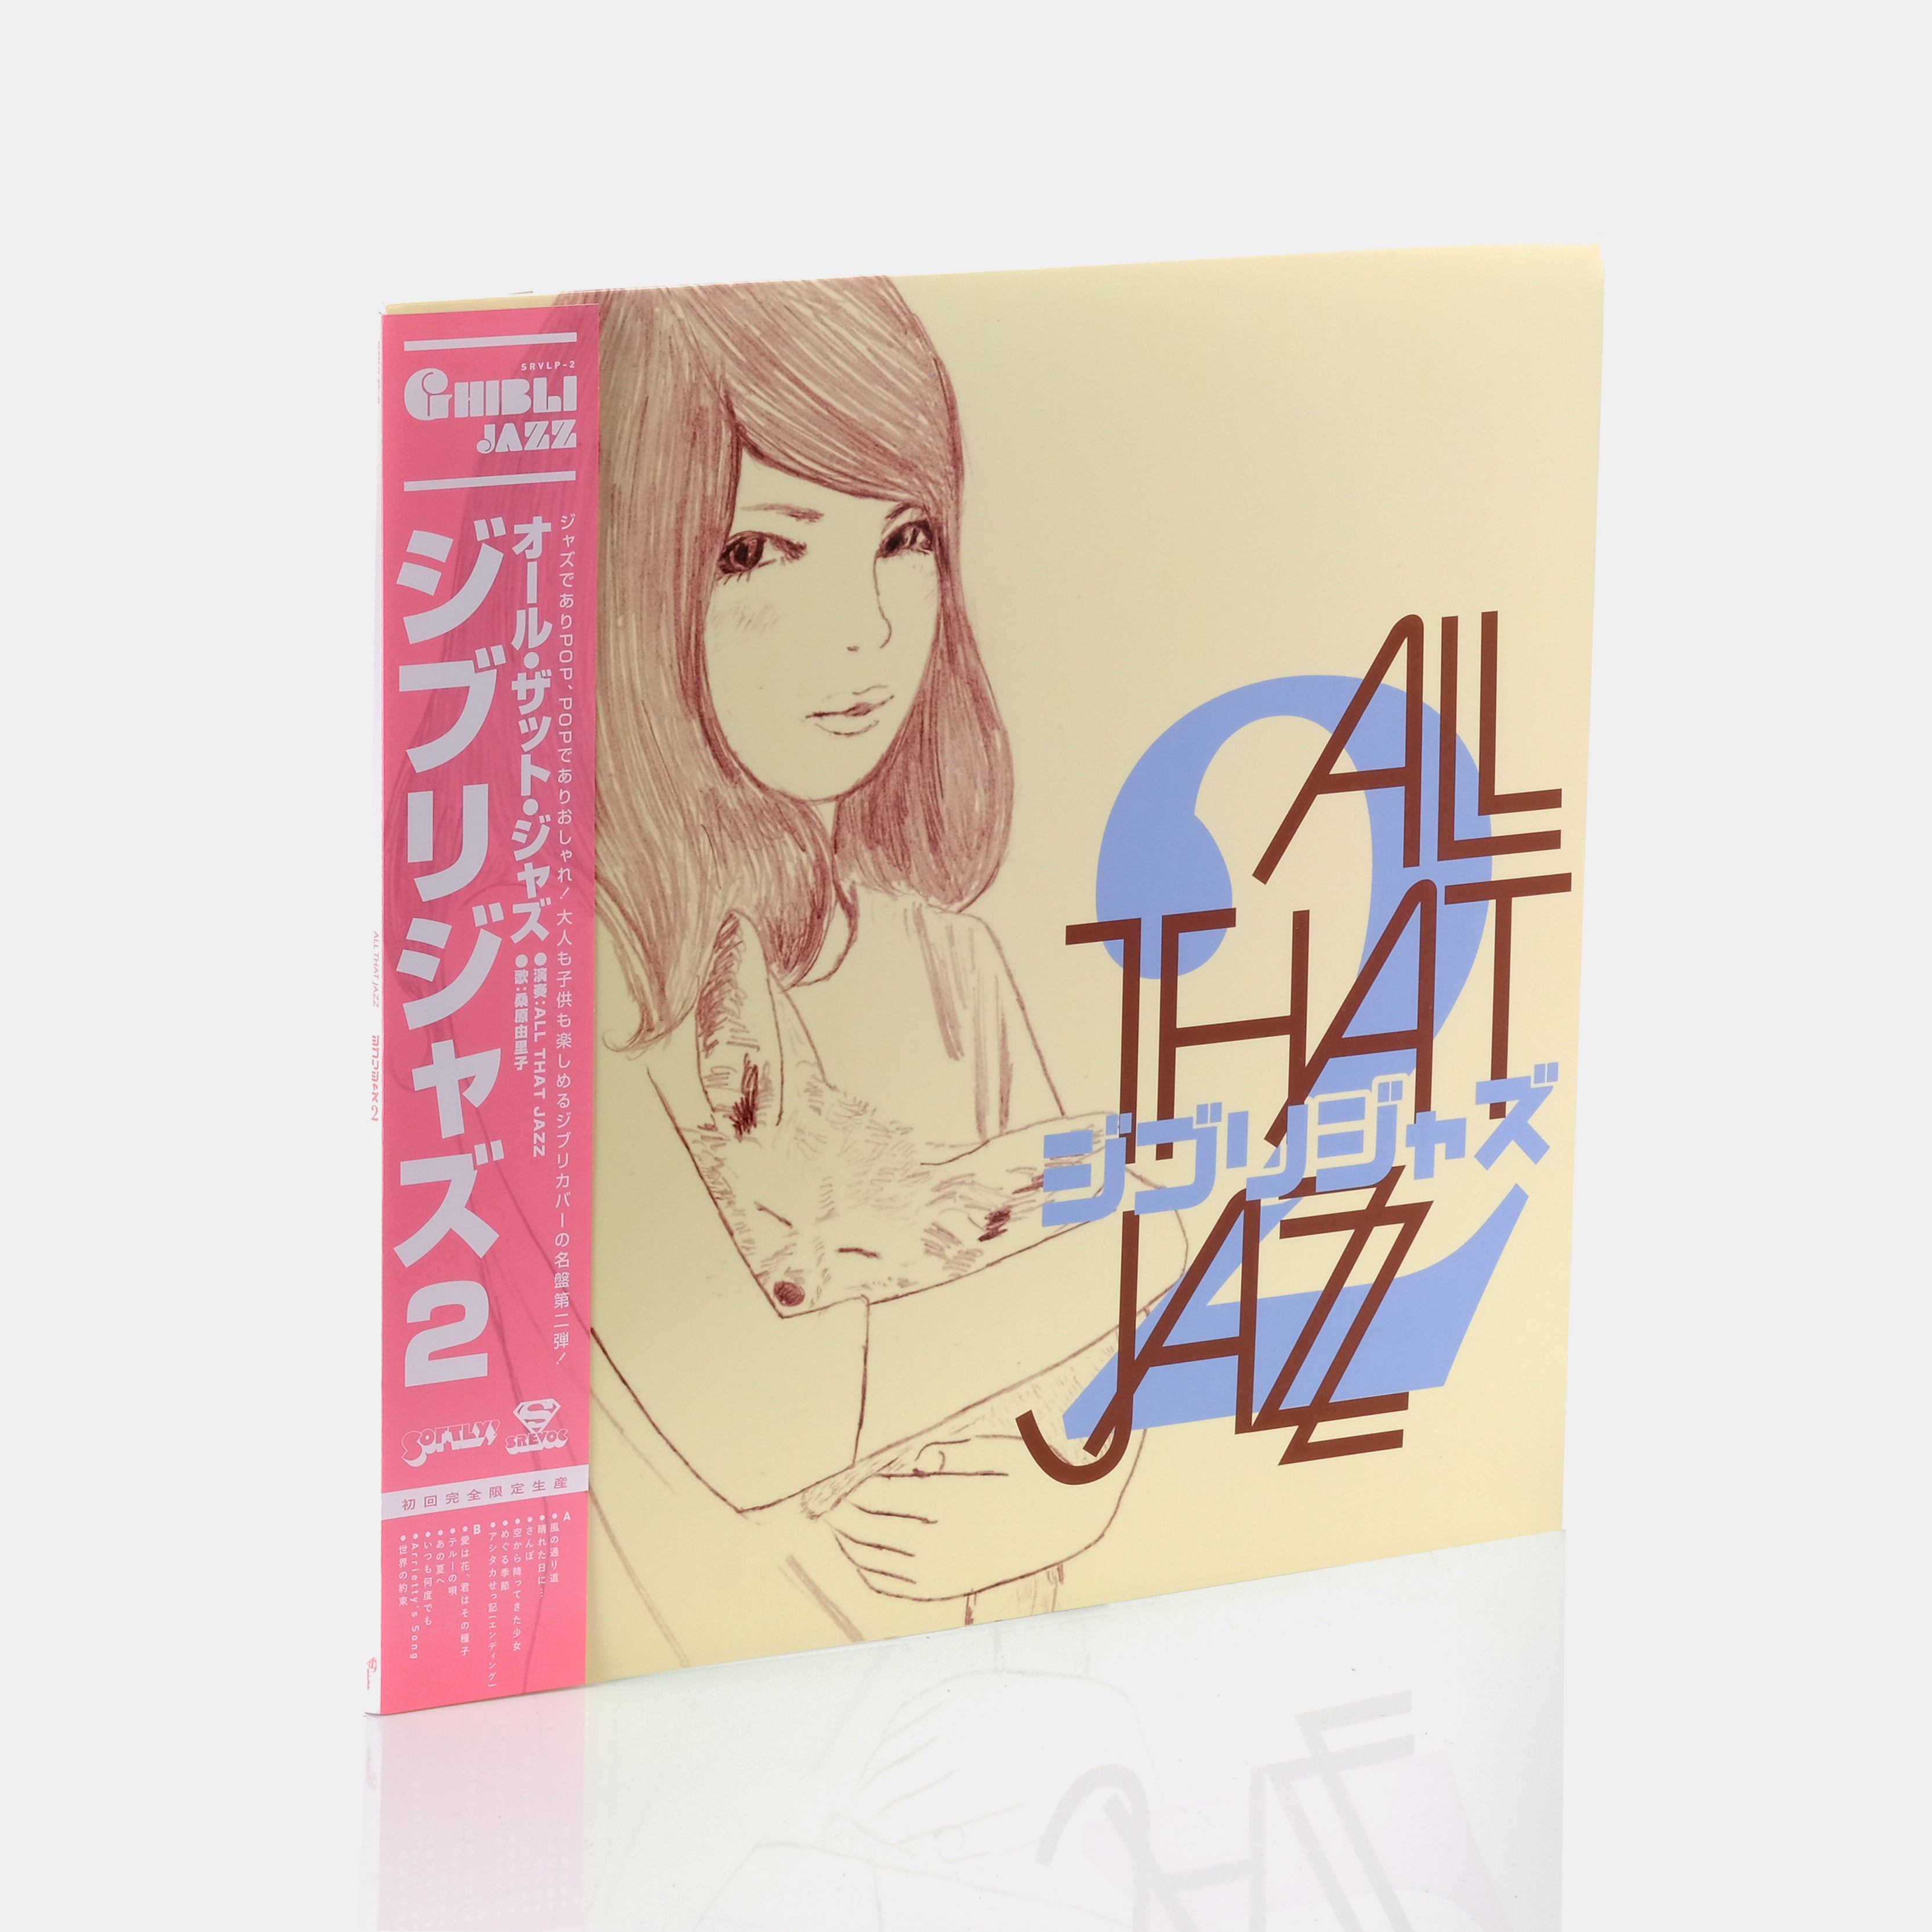 All That Jazz - ジブリジャズ 2 (Ghibli Jazz 2) Limited Edition LP Vinyl Record